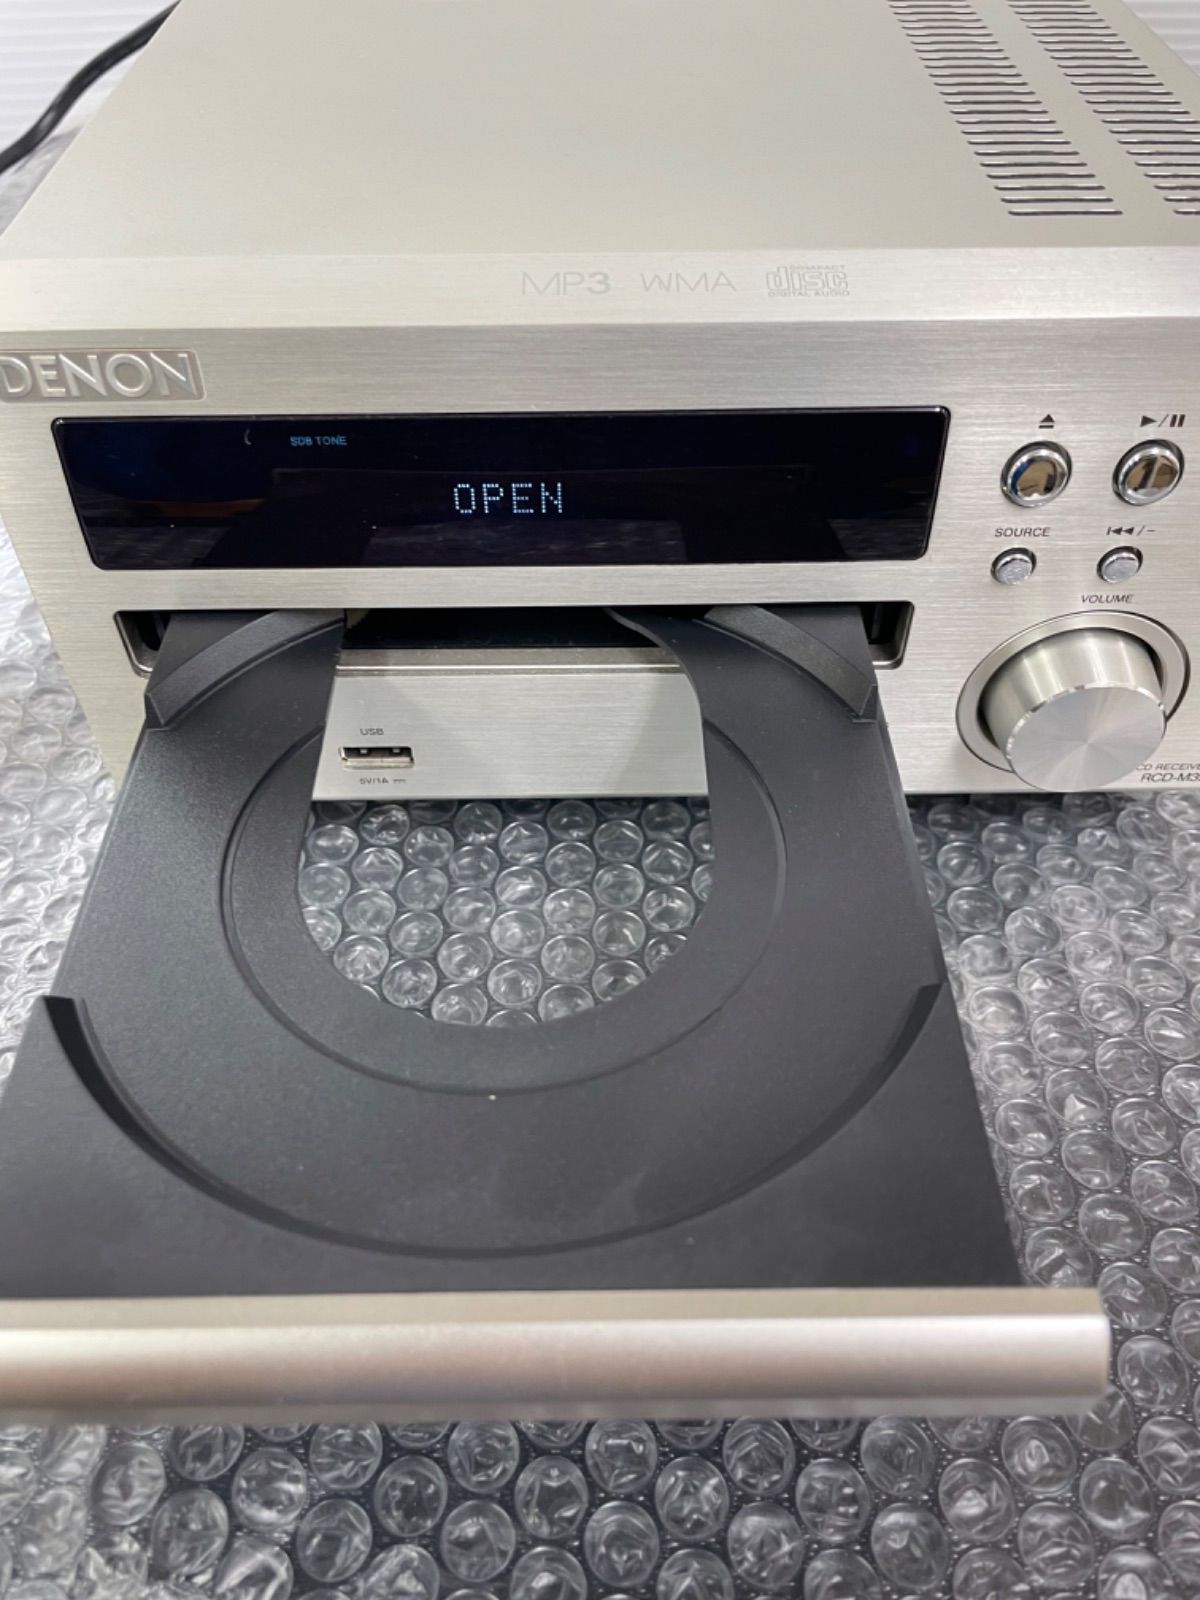 Denon CDレシーバー iPod対応 プレミアムシルバー RCD-M39 - Reクル